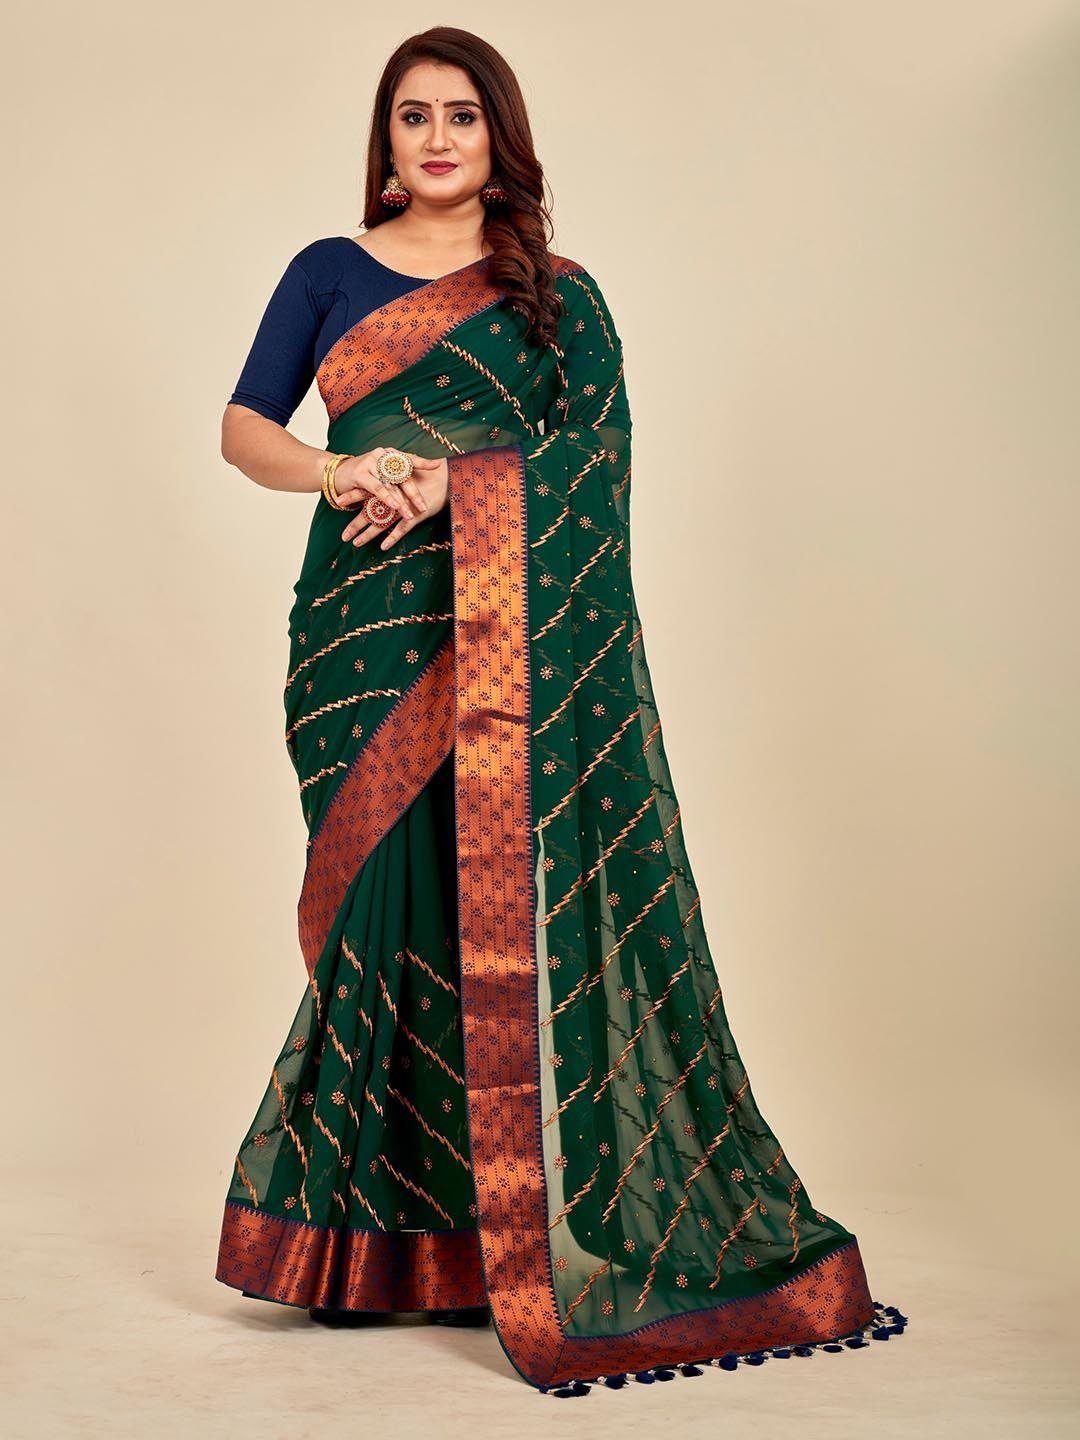 mahalasa olive green embellished embroidered art silk designer saree